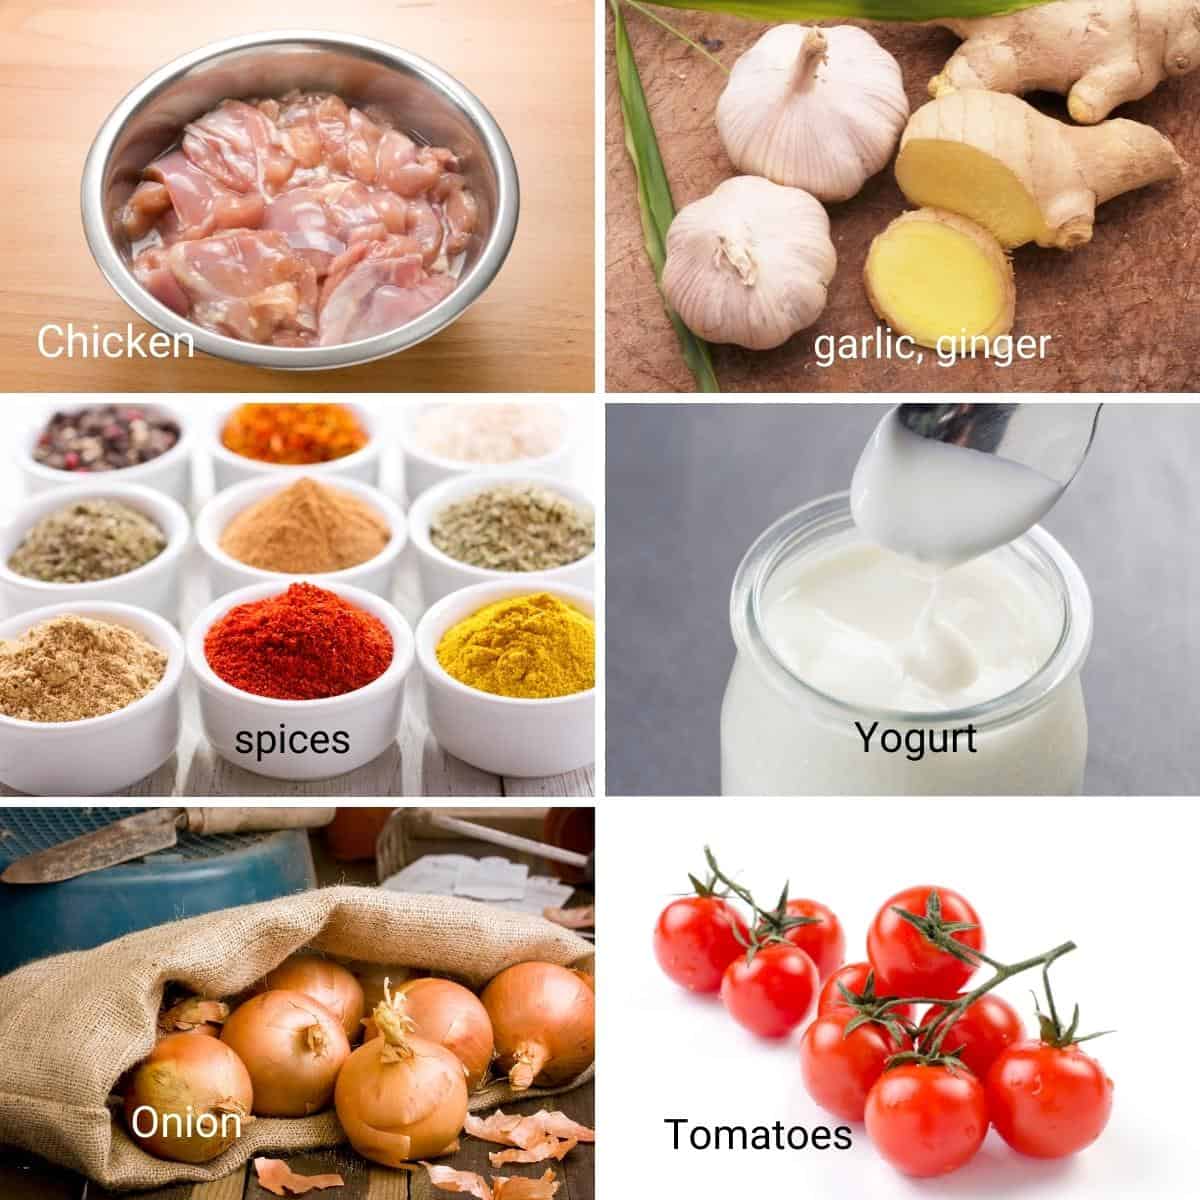 Ingredients for making chicken kebabs.